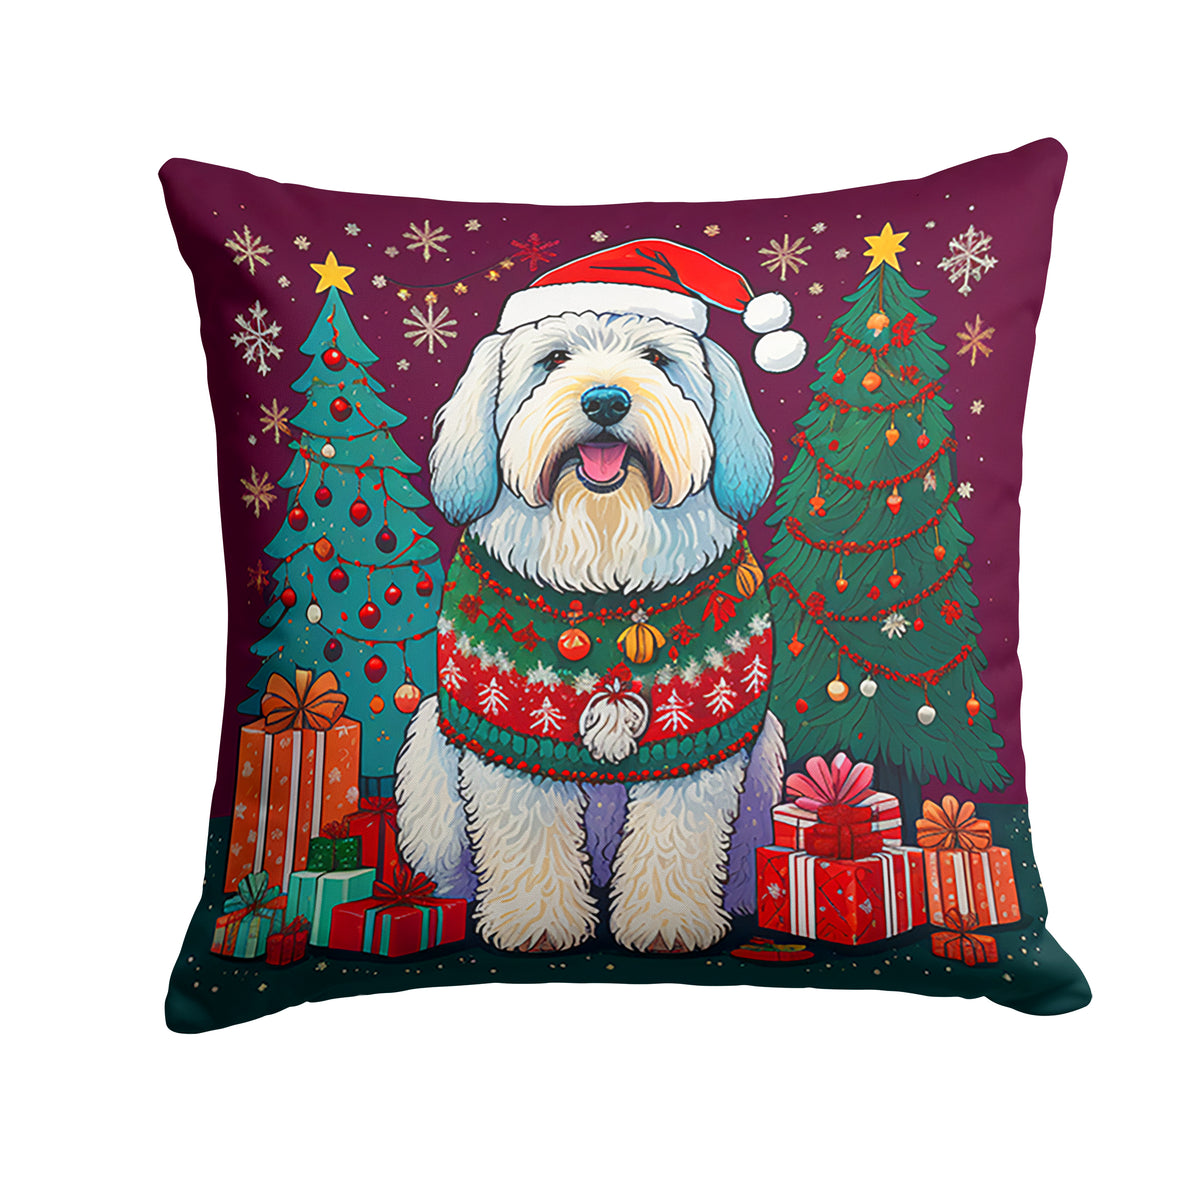 Buy this Old English Sheepdog Christmas Fabric Decorative Pillow